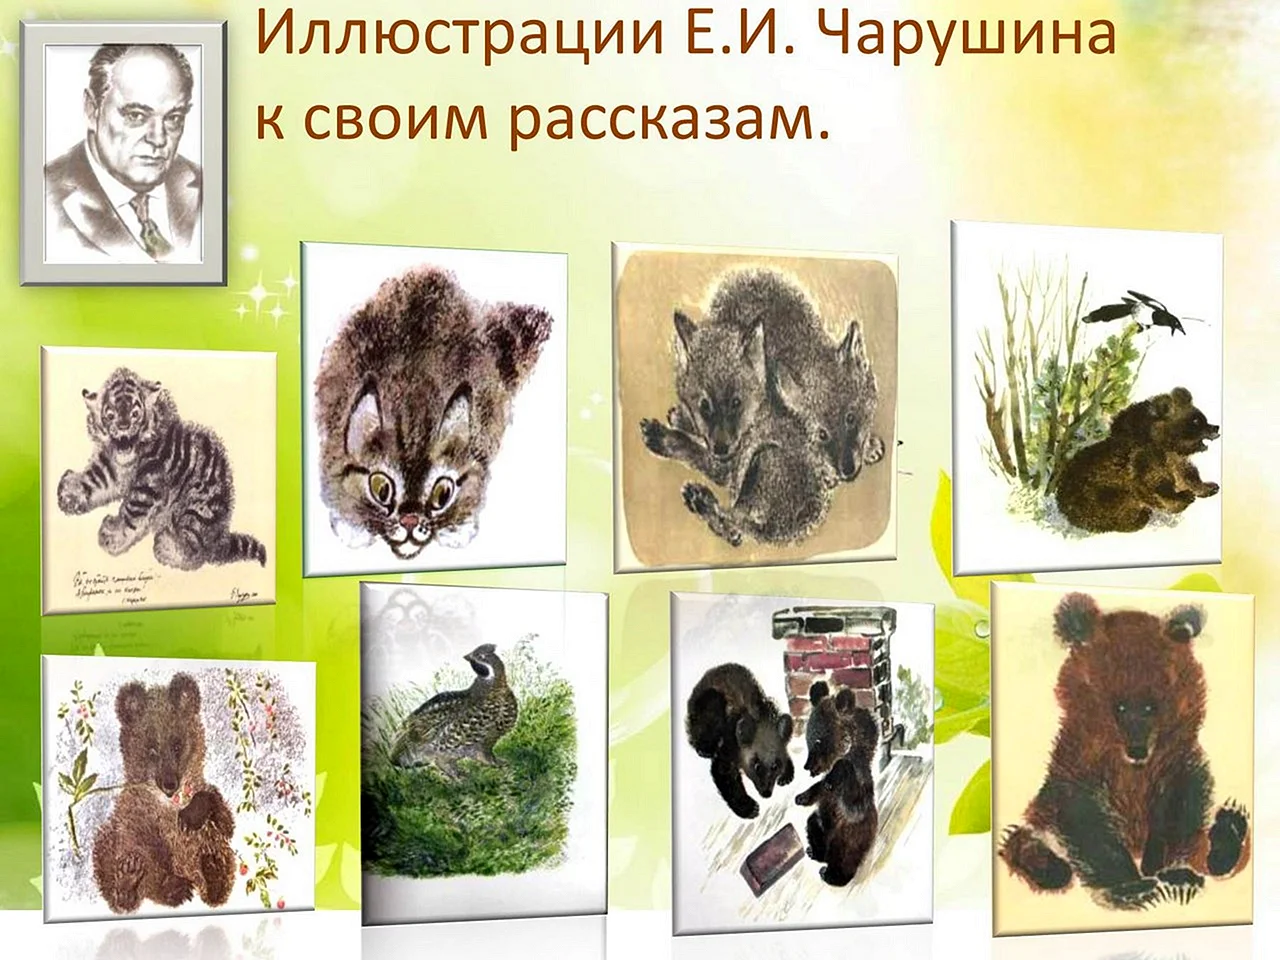 Евгений Иванович Чарушин мир животных